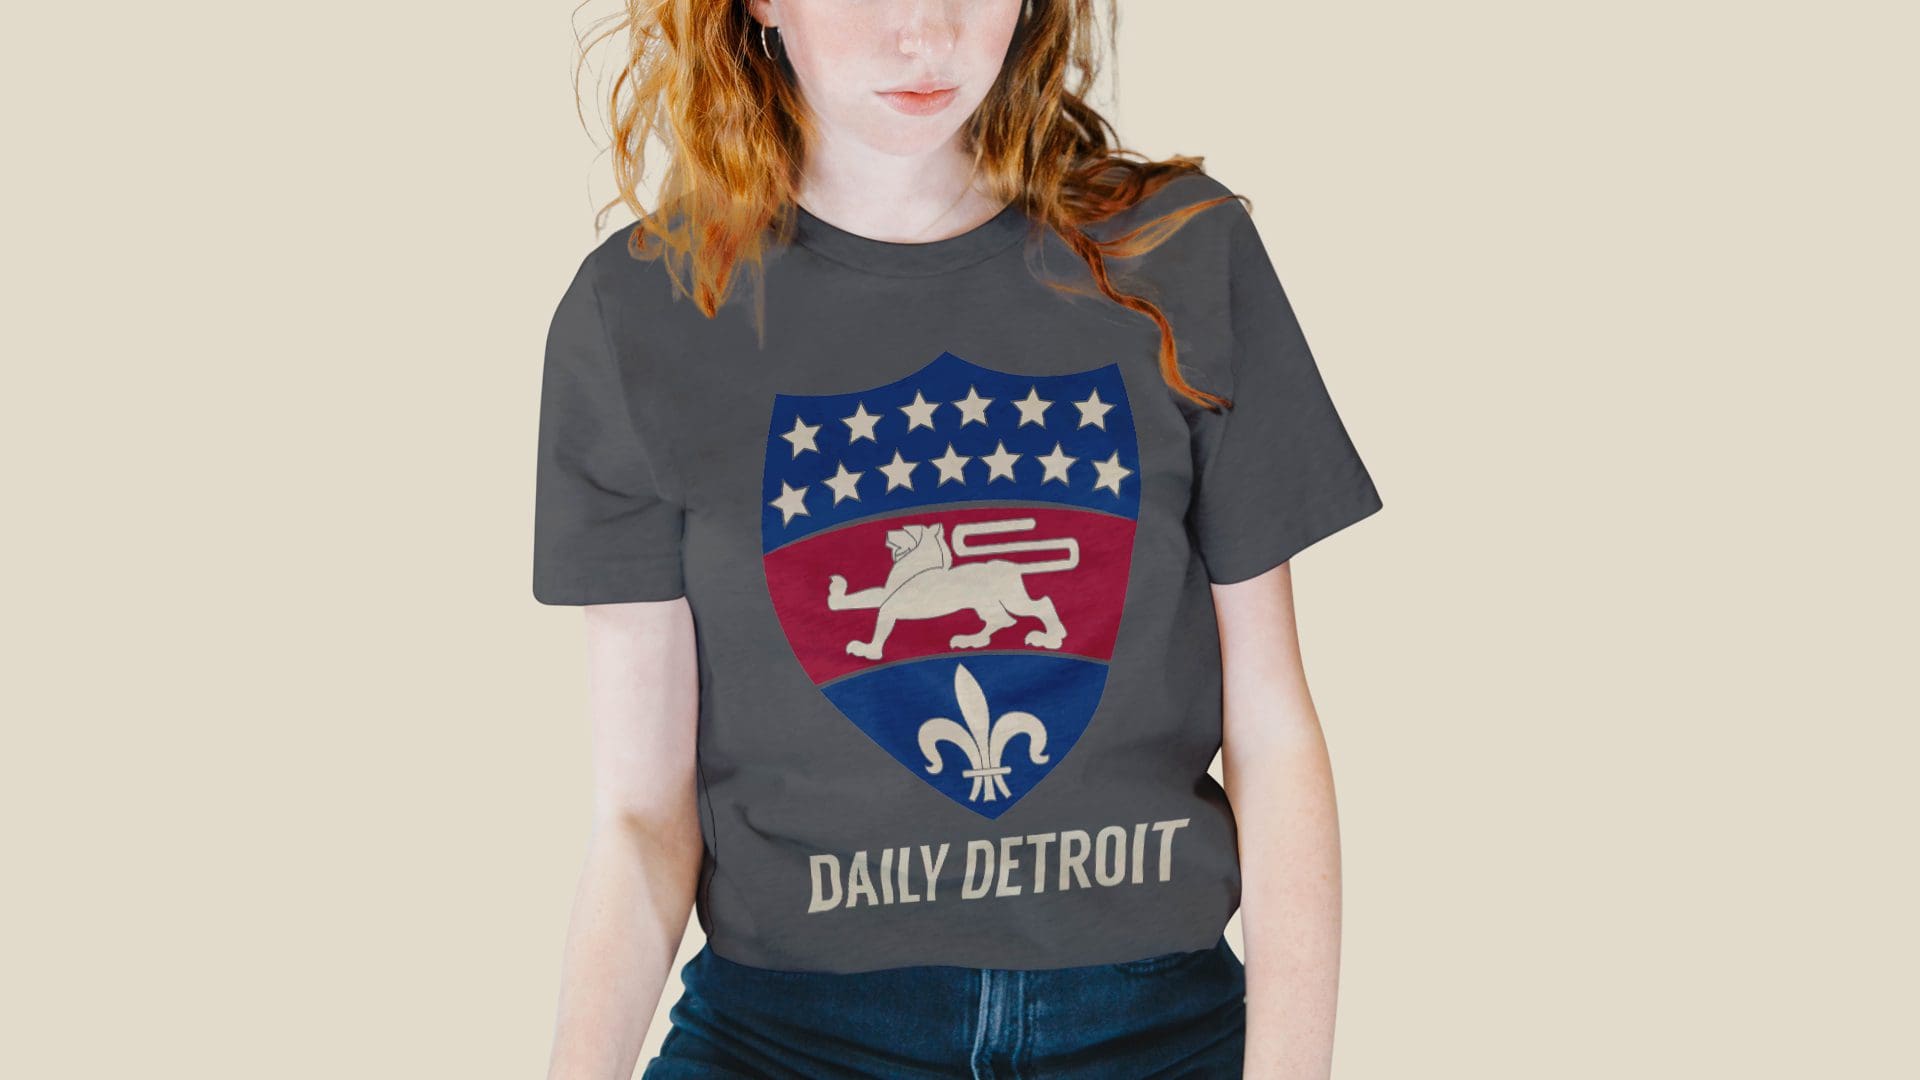 Daily Detroit - Silkscreen Shirt Mockup 03